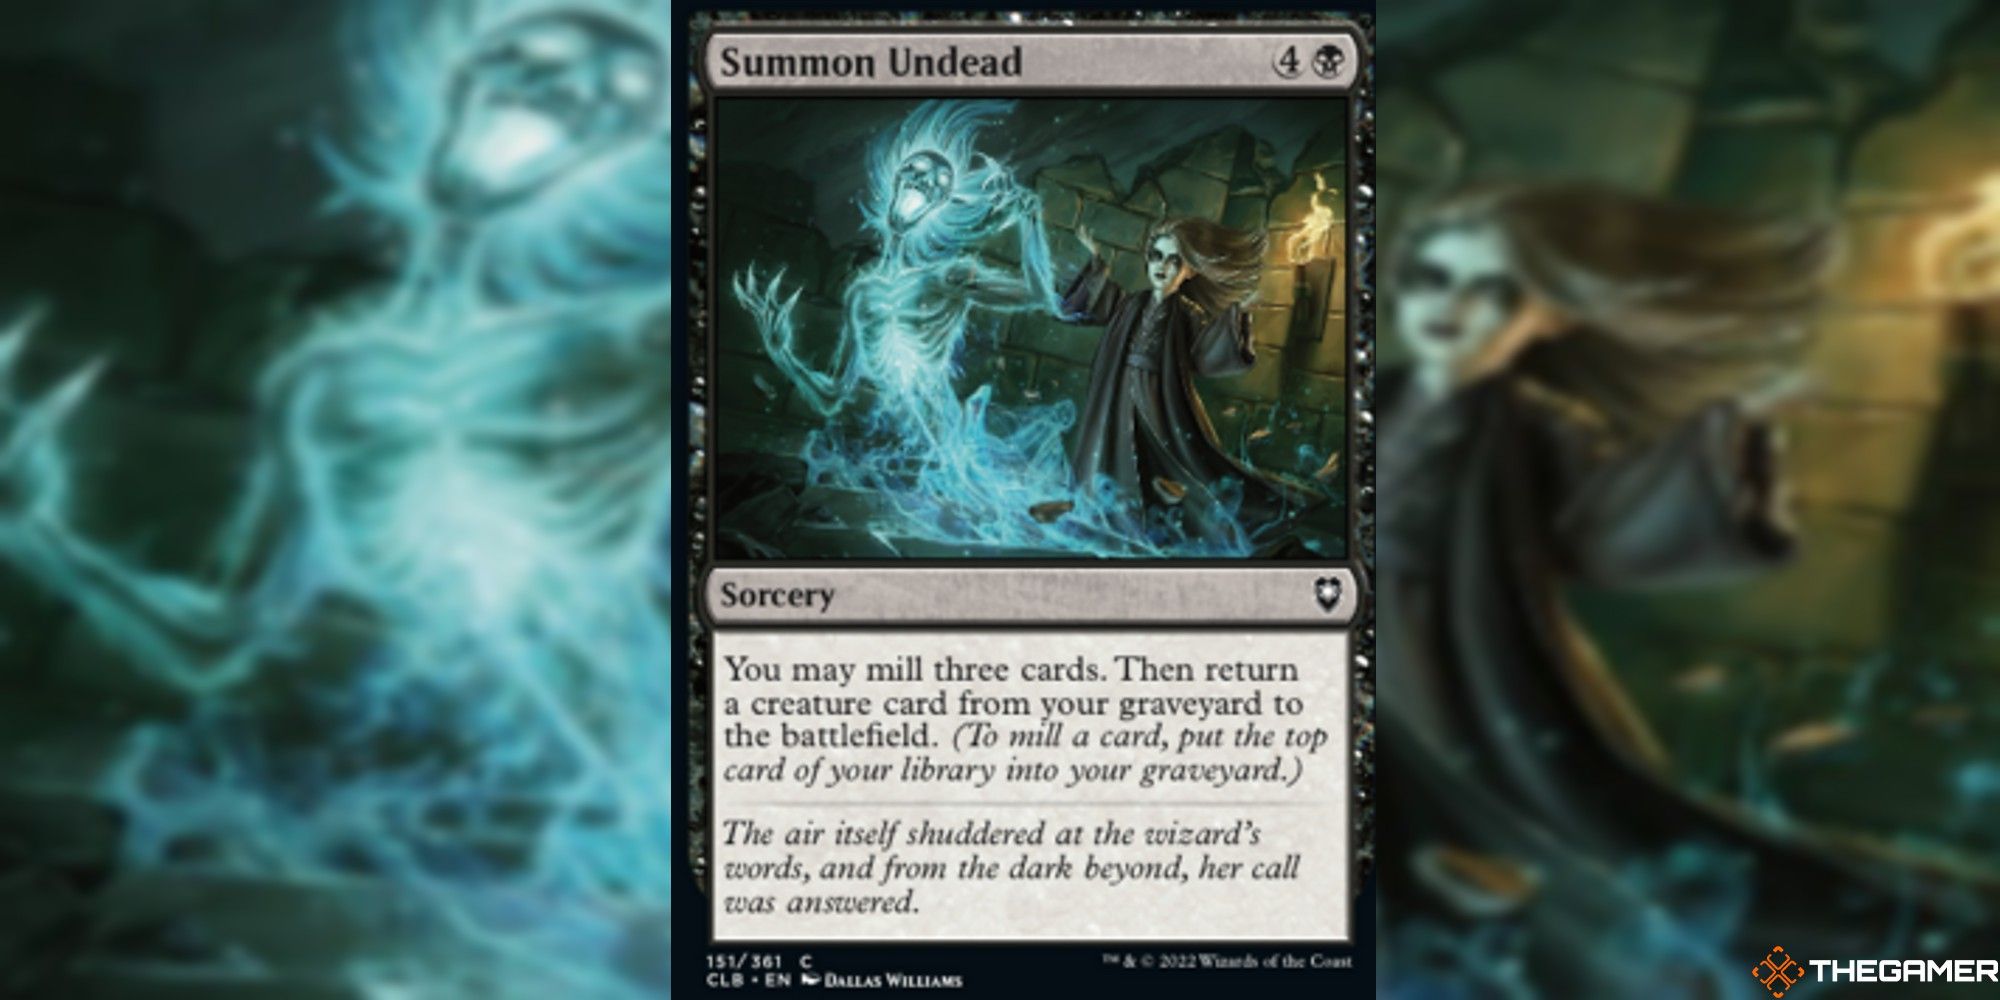 mtg summon undead card art and text